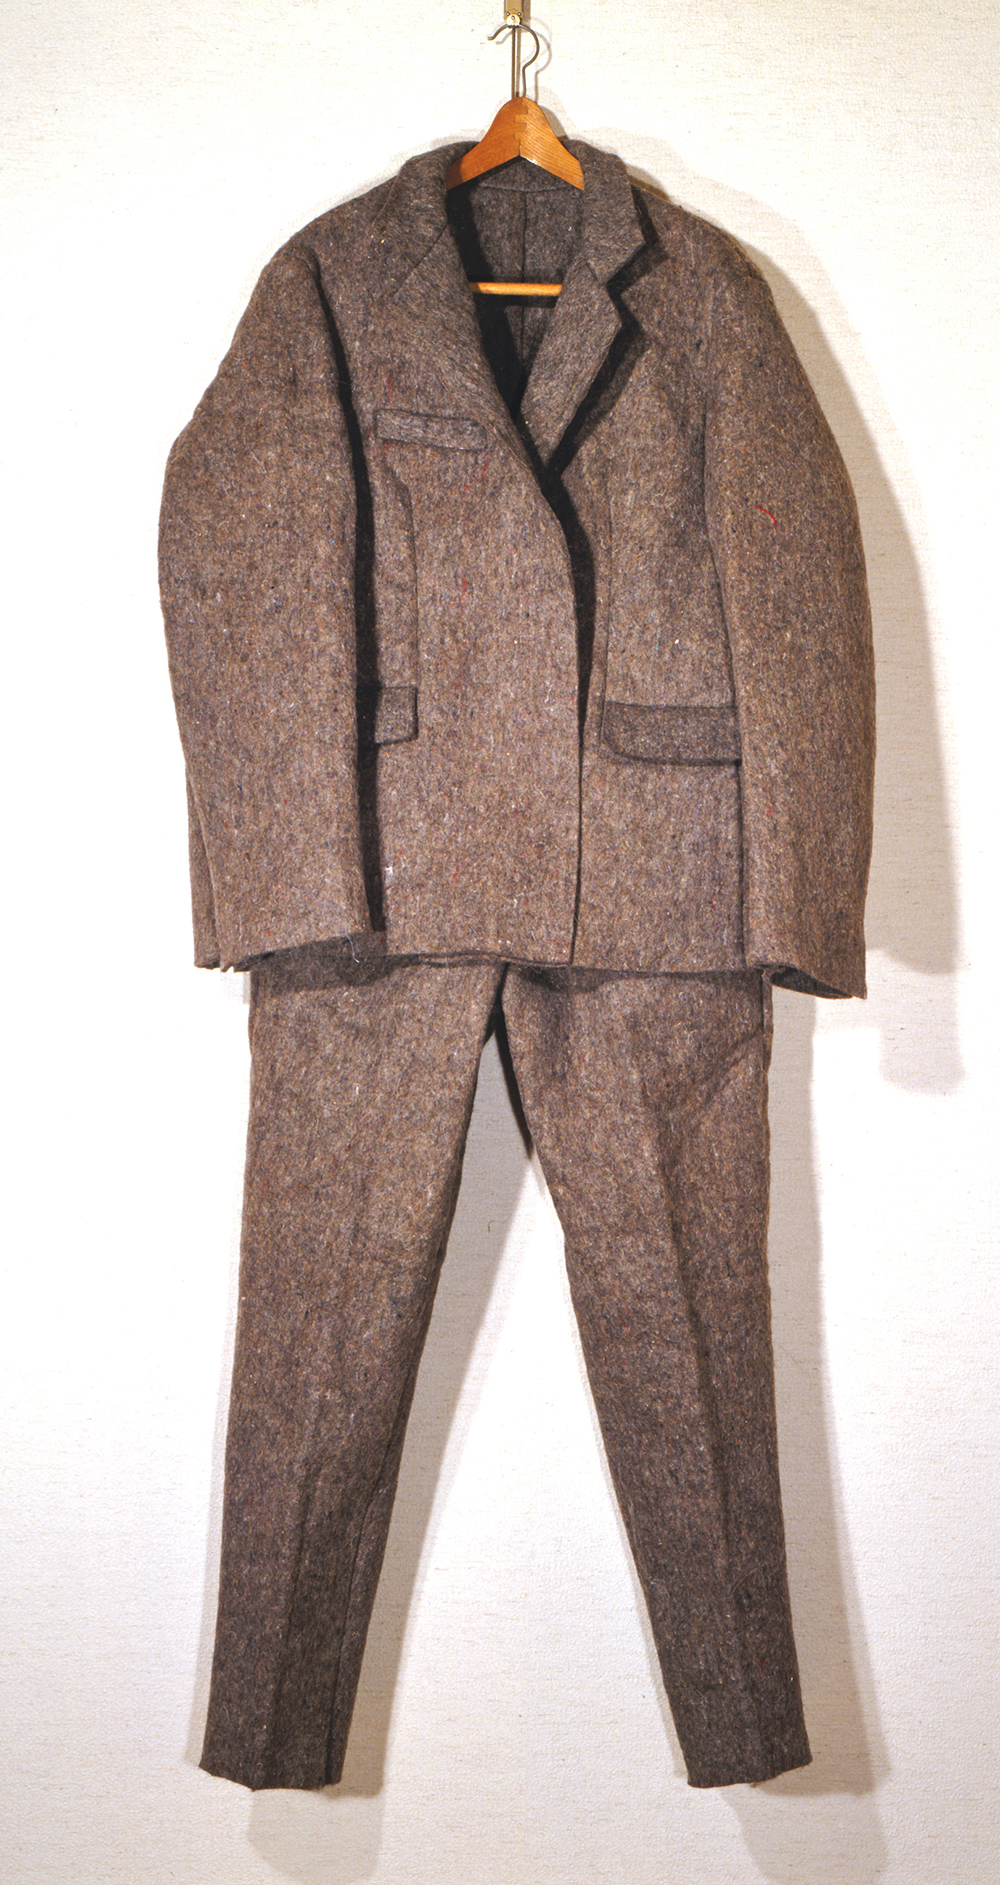 I LOVE ART 18 Perfect_Joseph Beuys, Felt suit, 1970